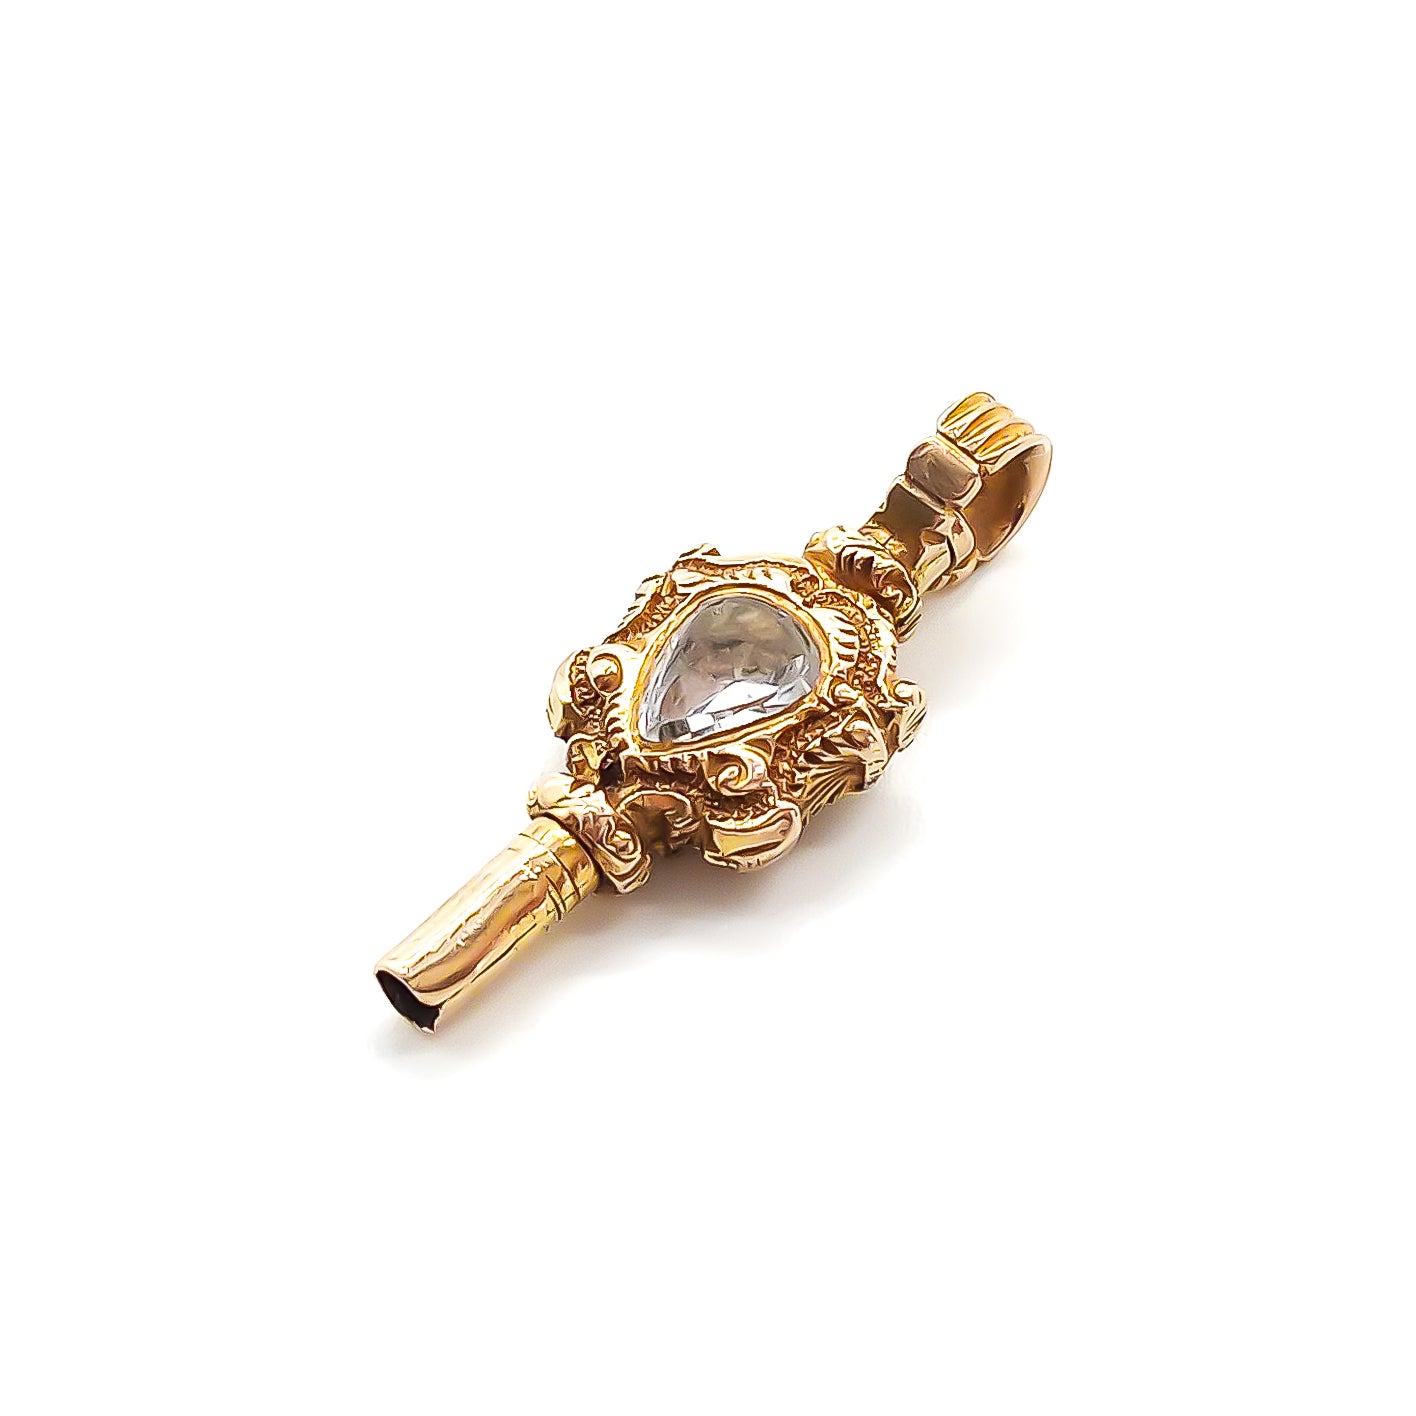 Victorian 9ct Gold Watch Key